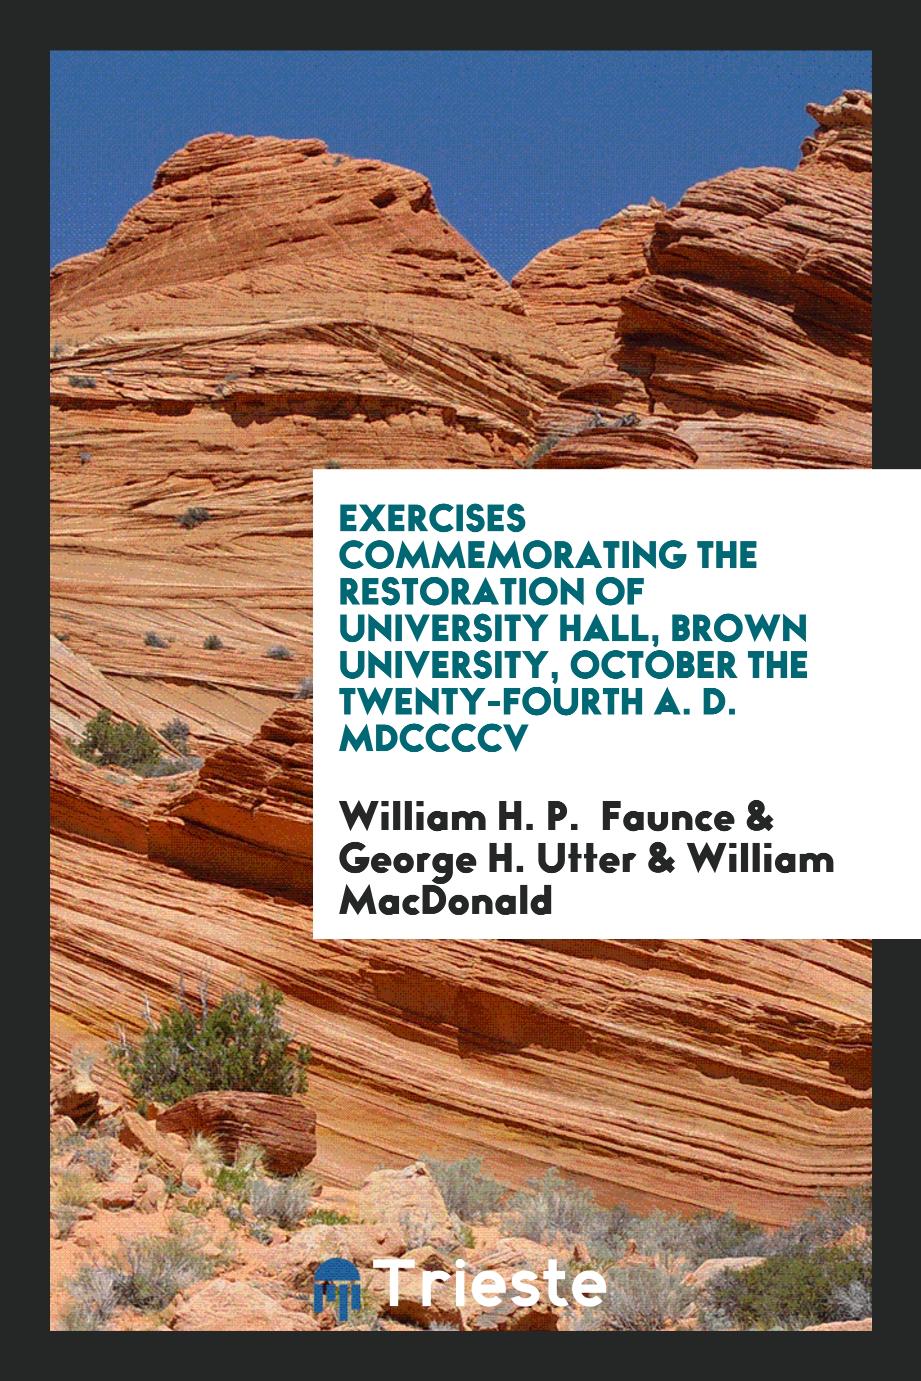 Exercises Commemorating the Restoration of University Hall, Brown University, October the twenty-fourth A. D. MDCCCCV